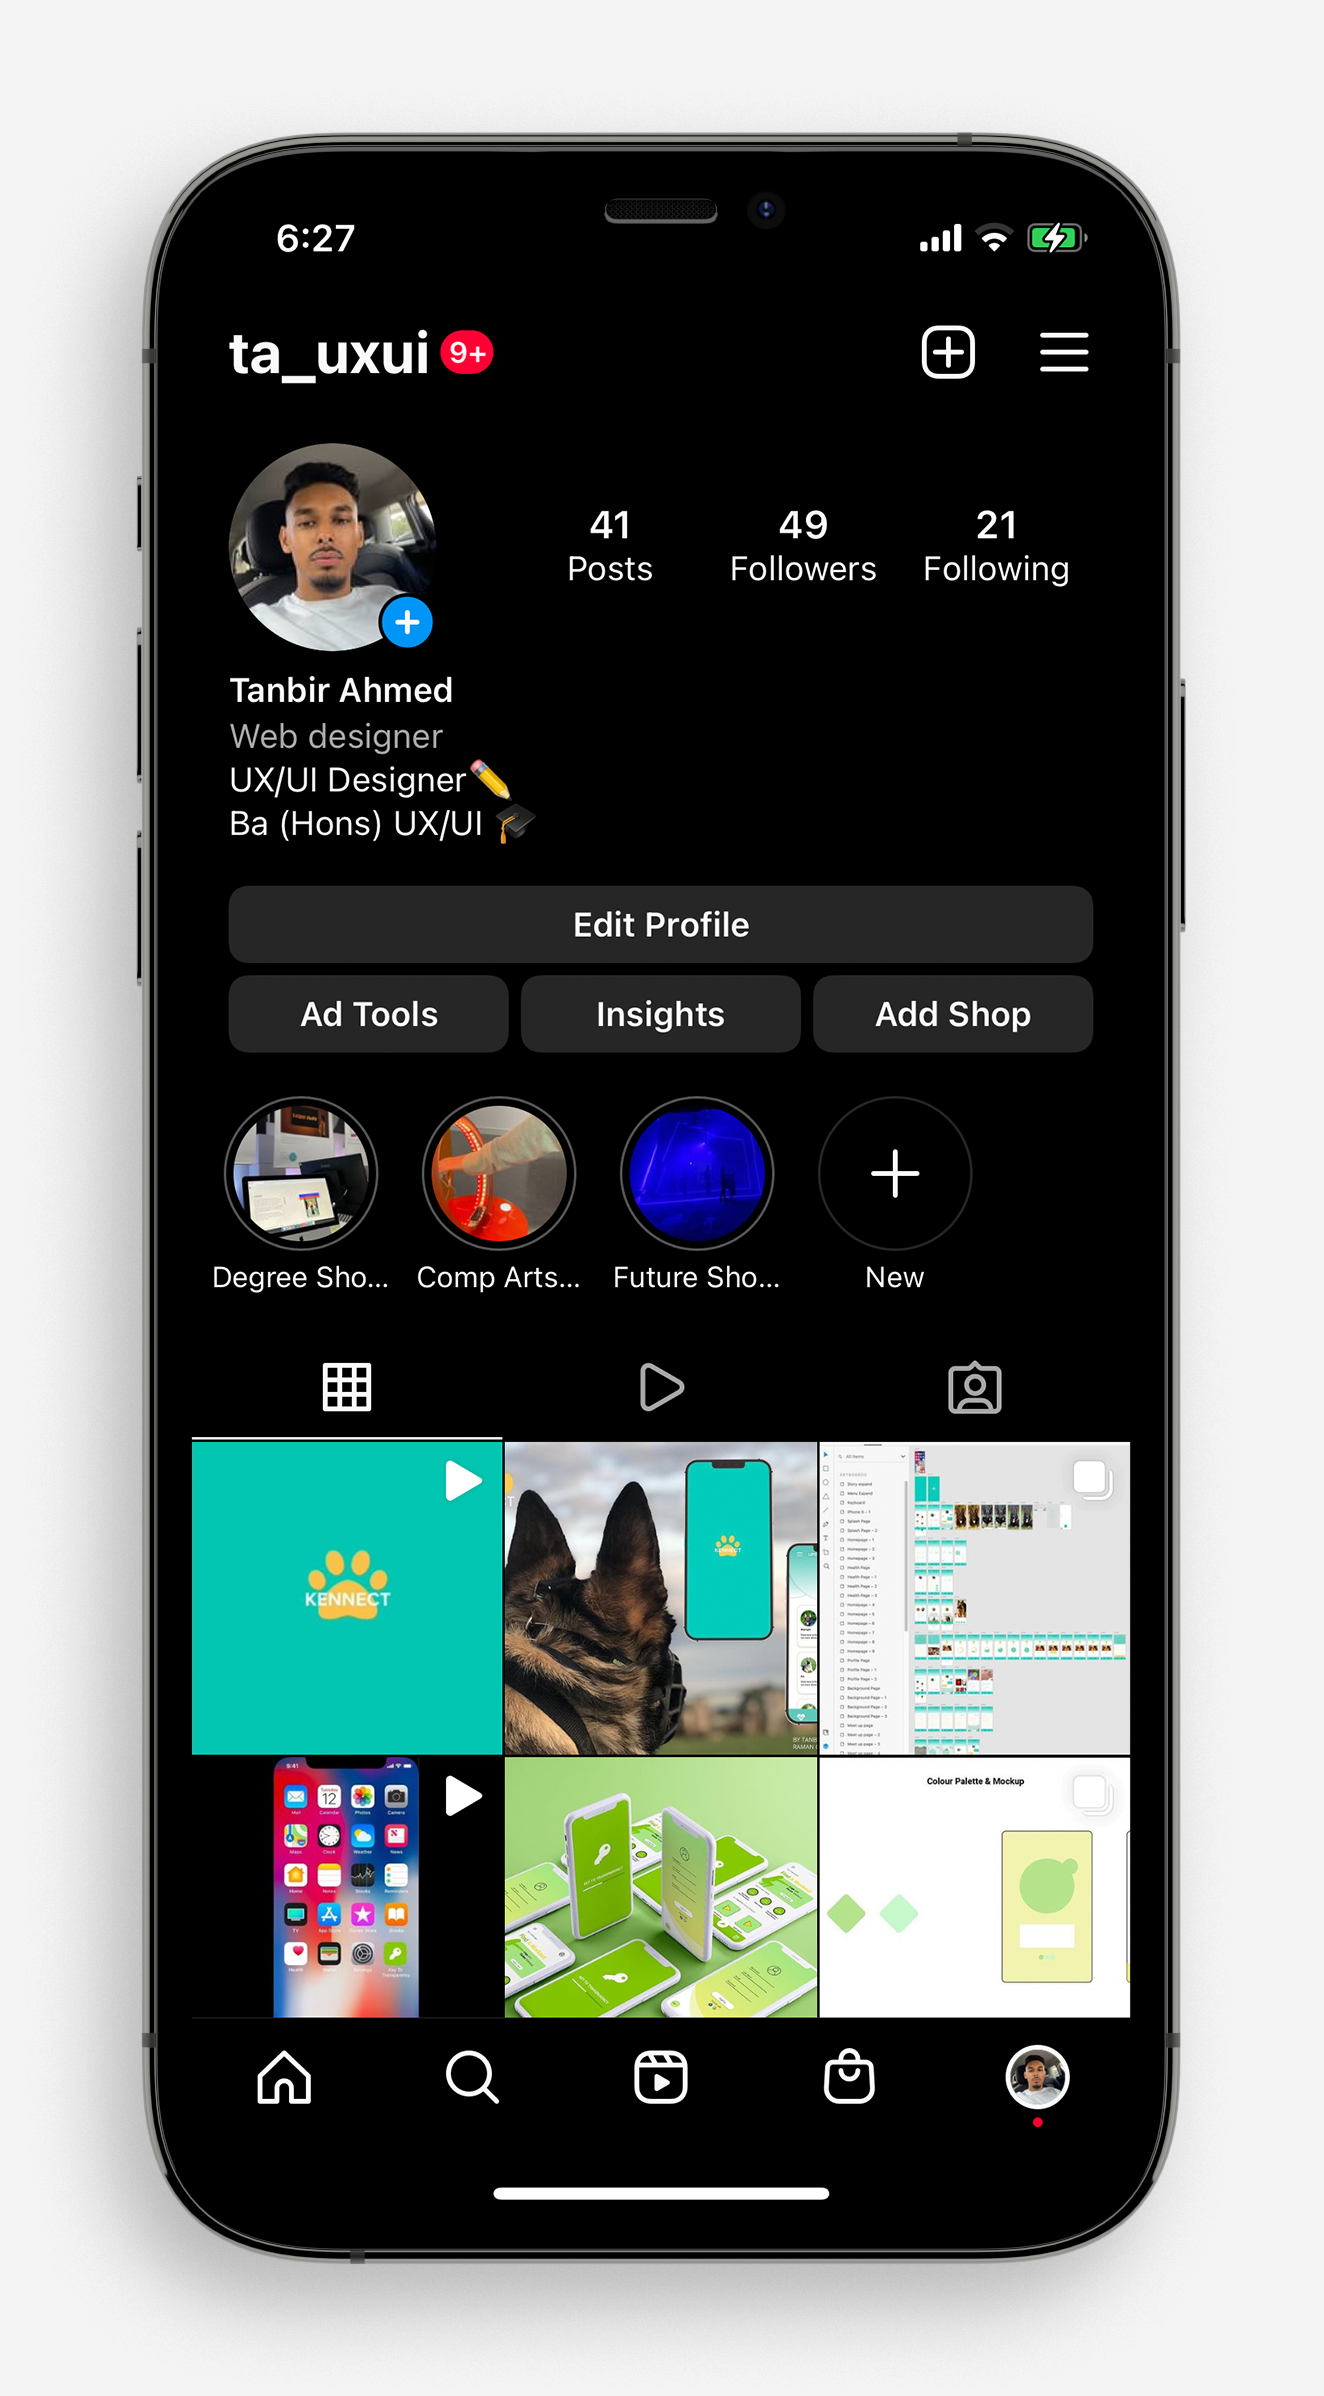 Omnifood app on iPhone